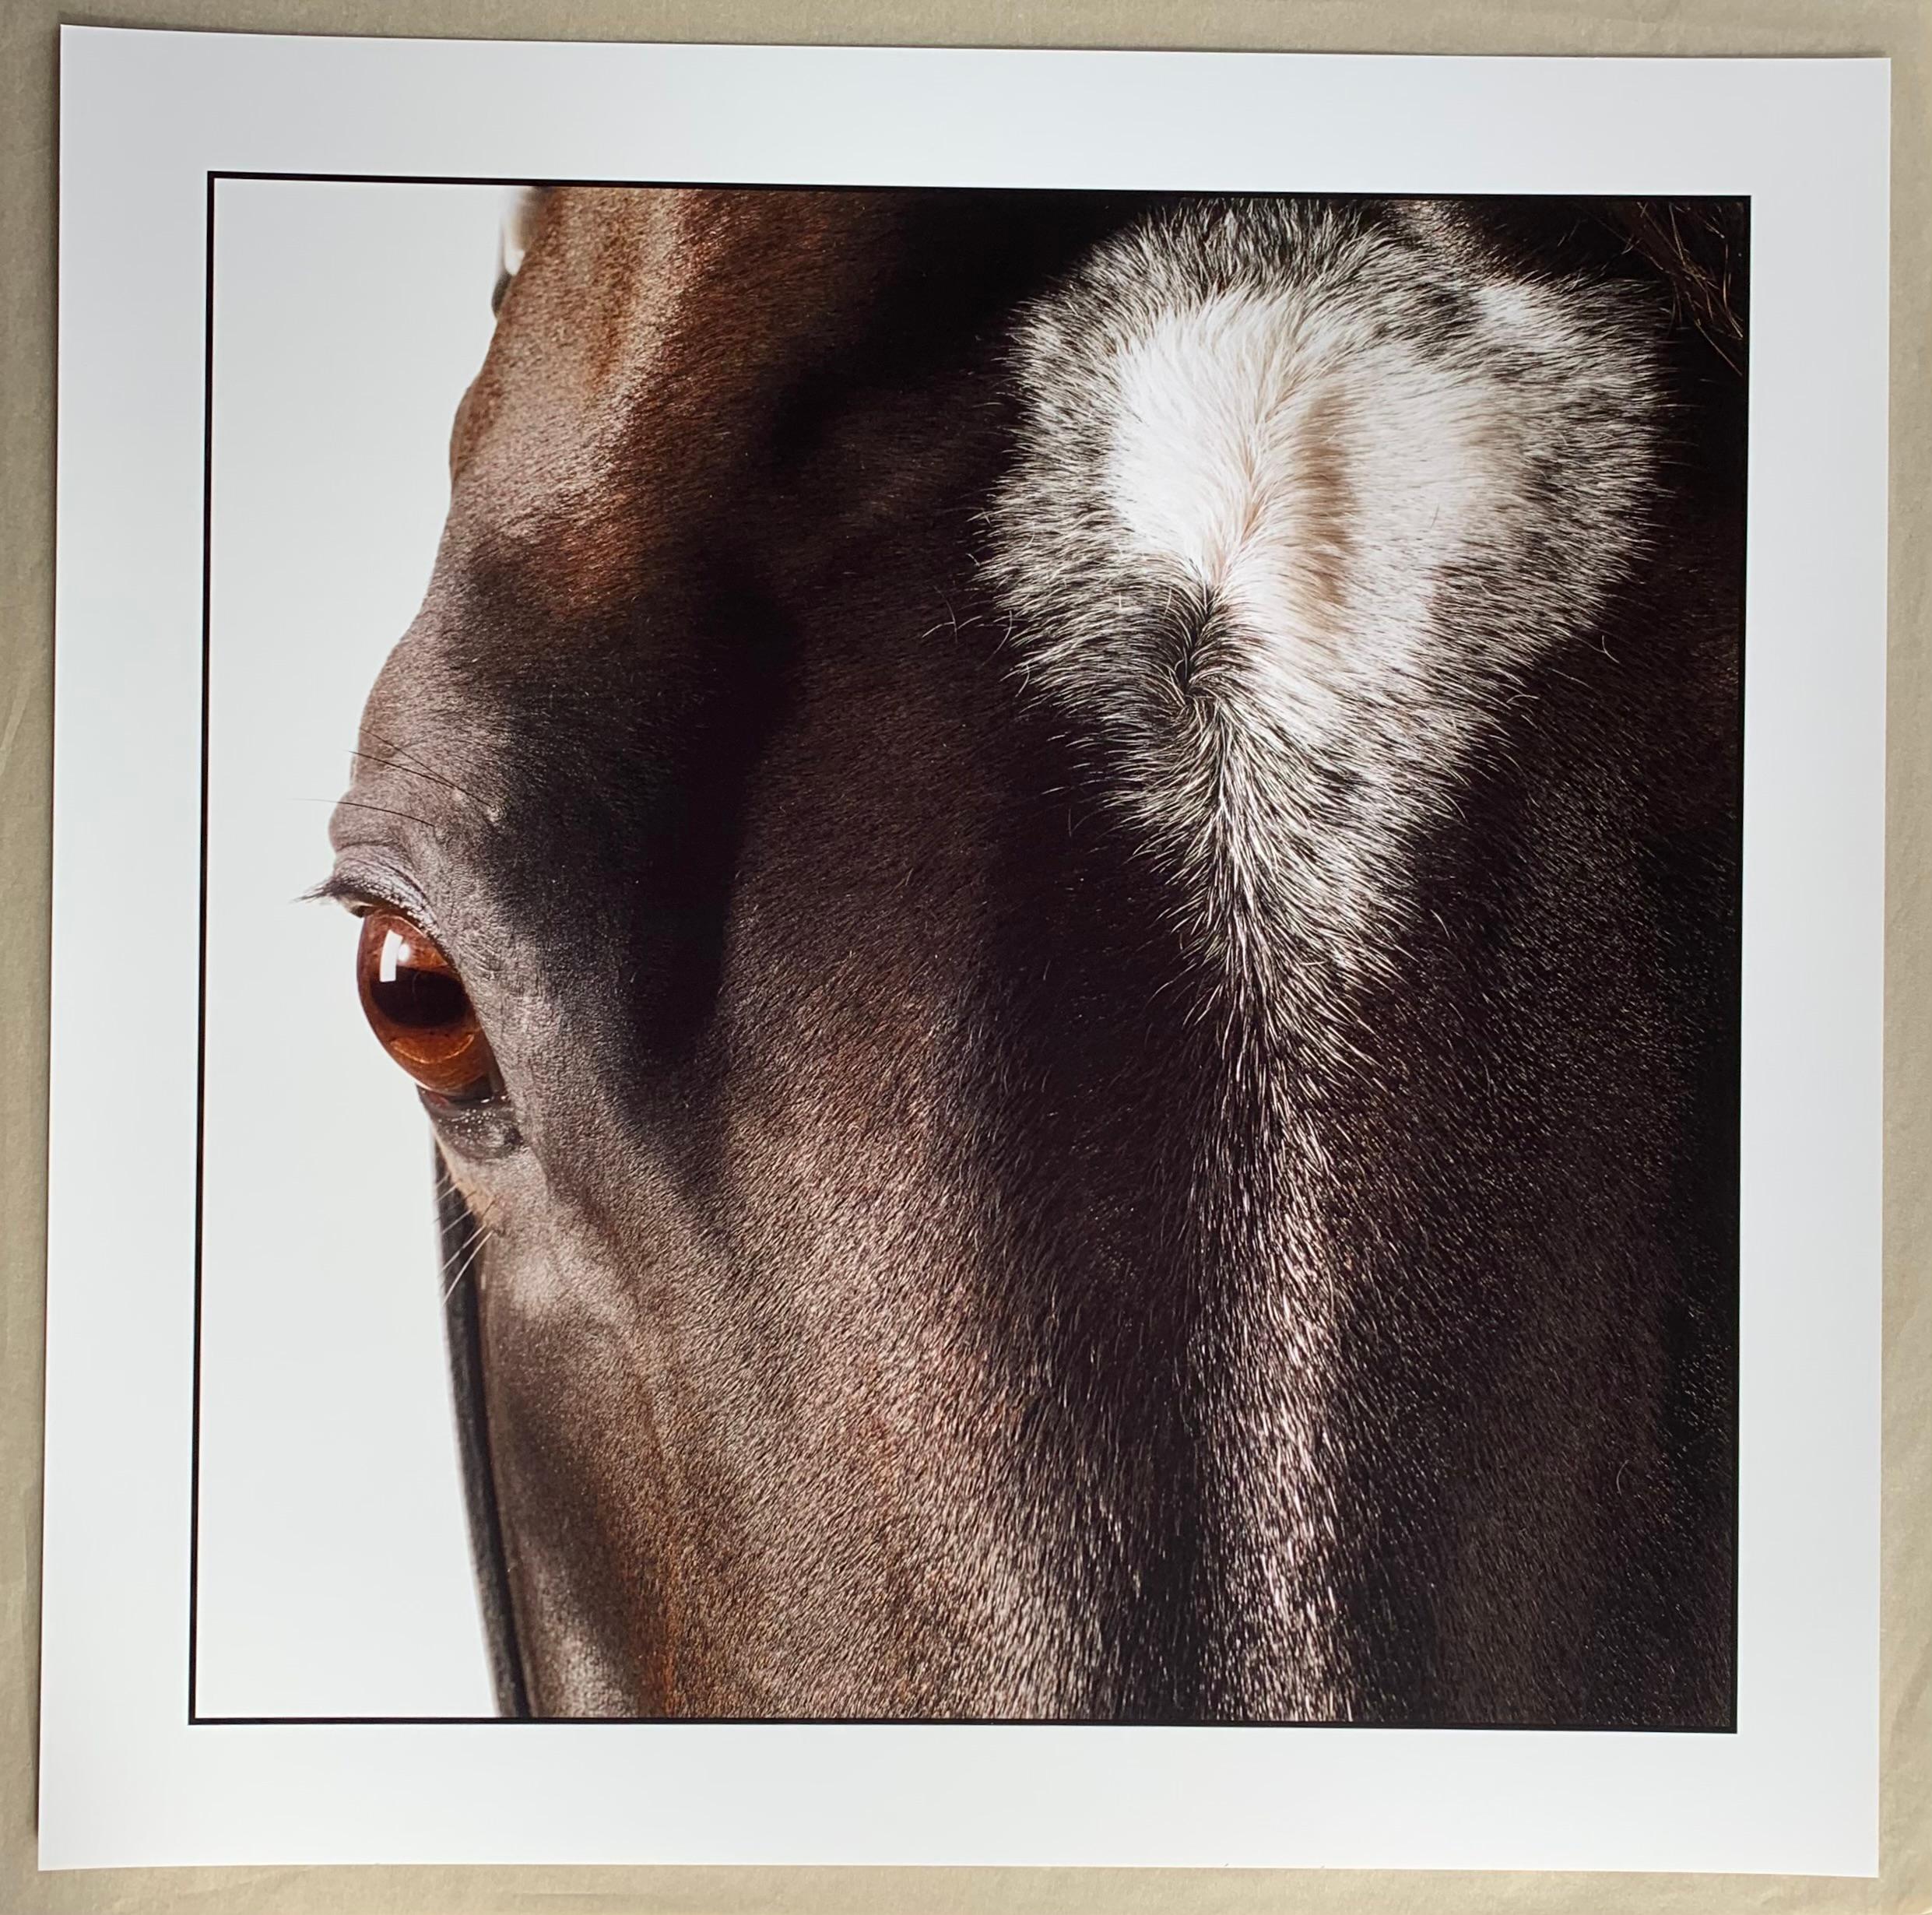 Medaglia d’Oro, Horse head and eye - Stallion Portrait unframed Print on Paper - Black Animal Print by John Reardon